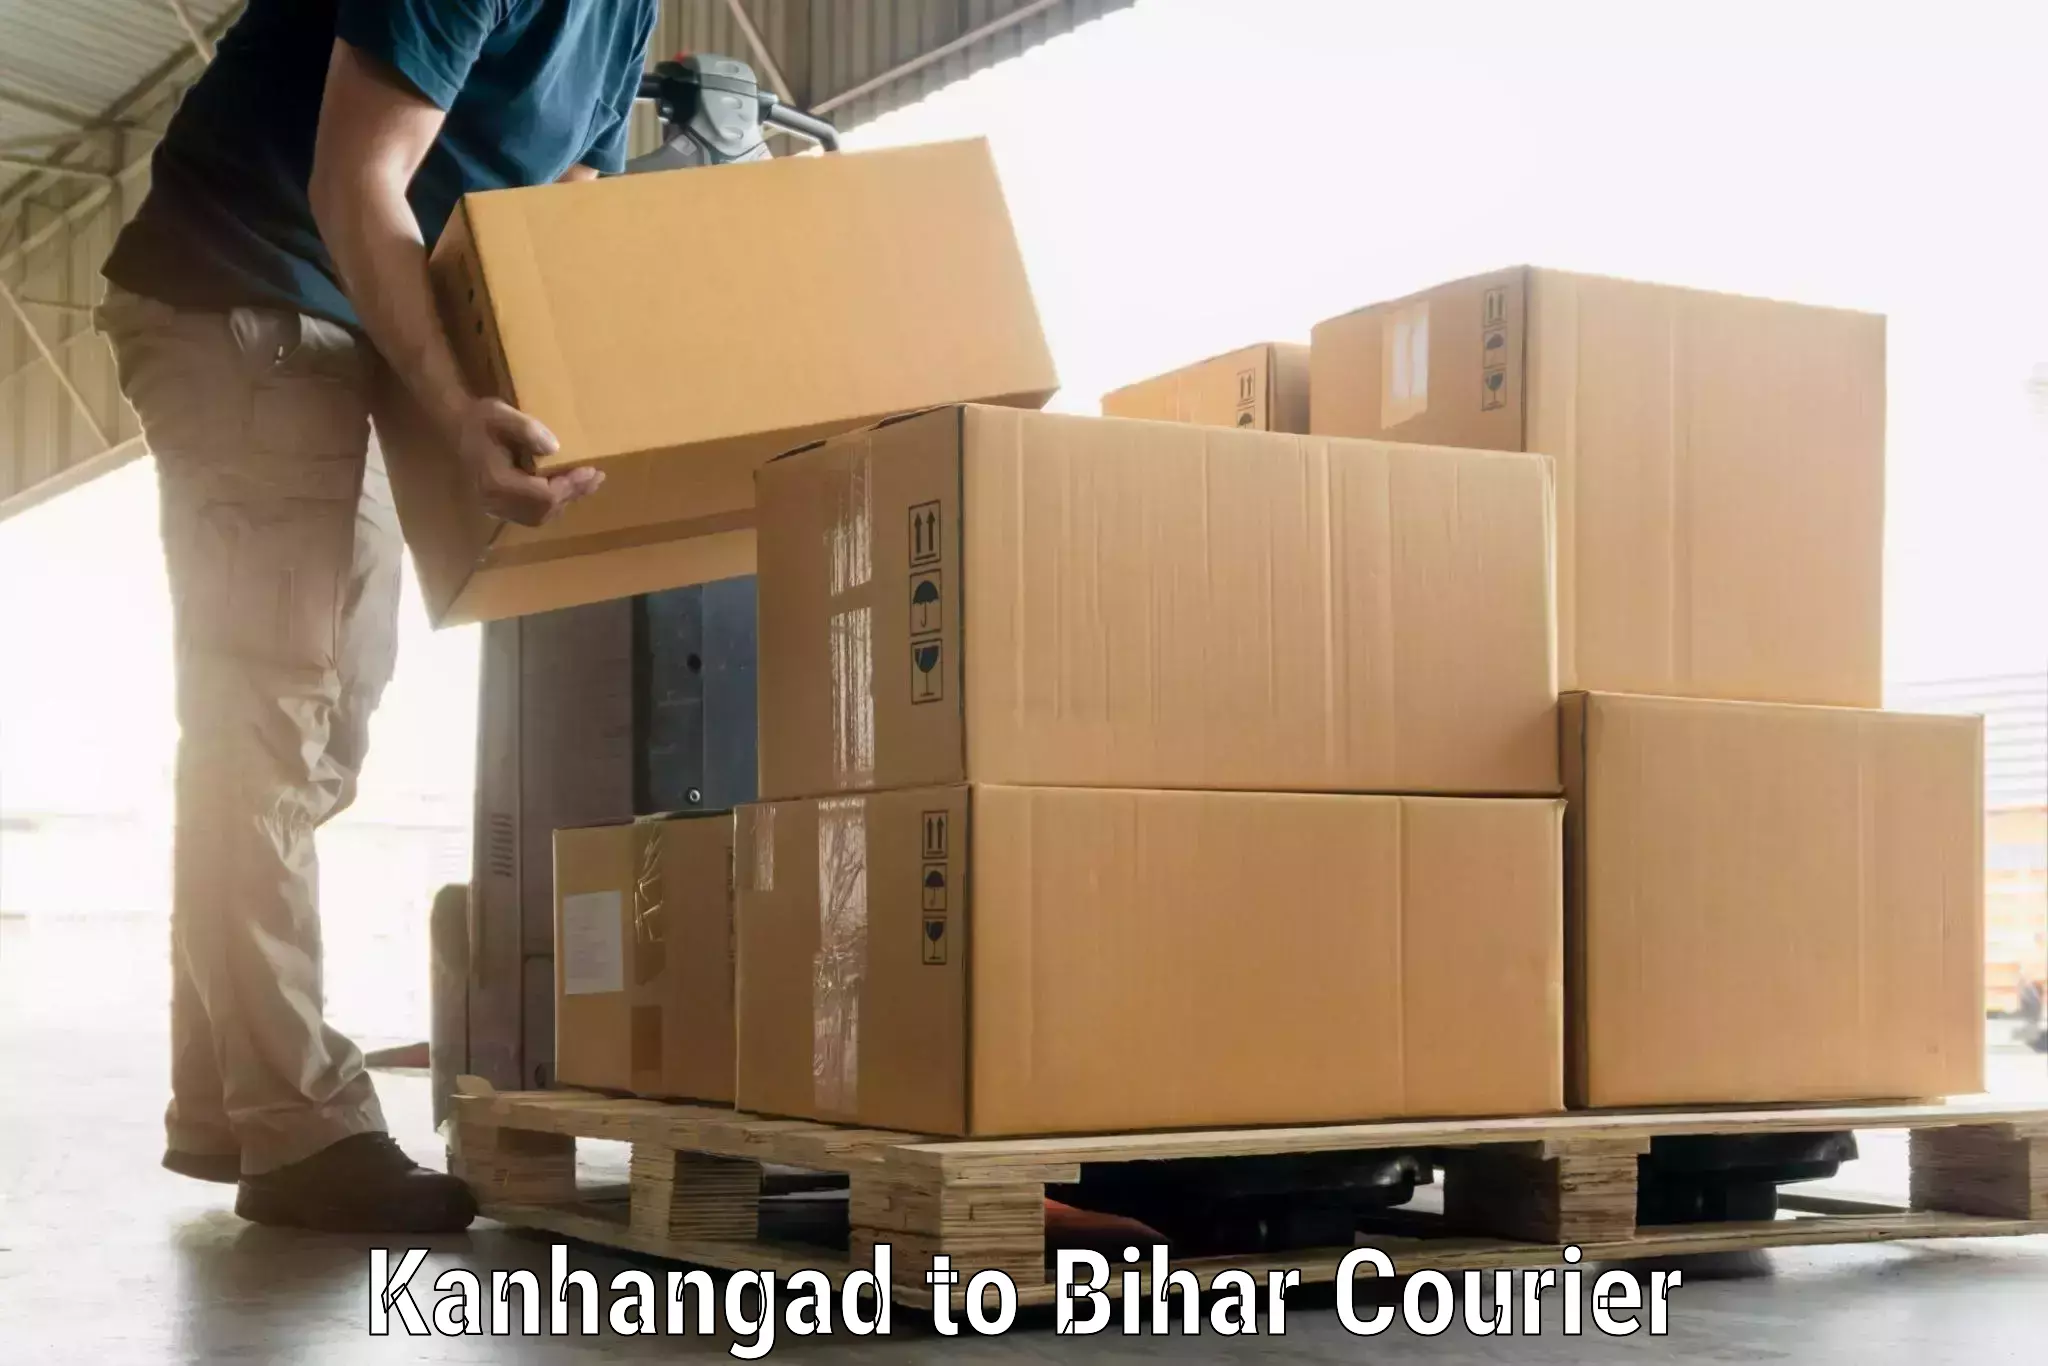 Luggage shipment specialists Kanhangad to Bihar